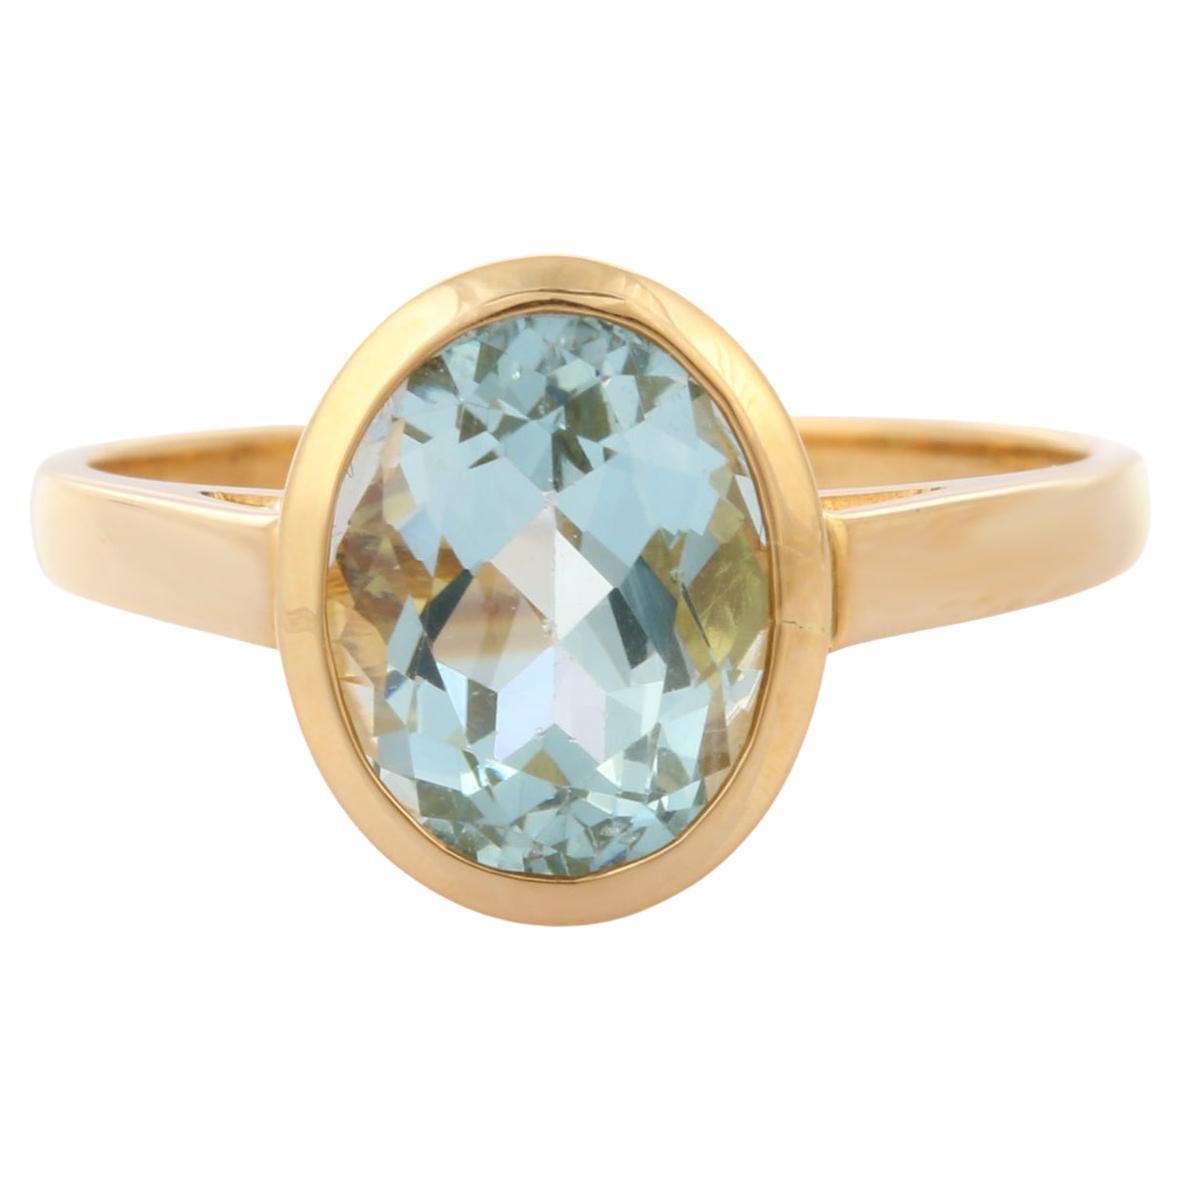 For Sale:  18K Solid Yellow Gold 2.55 ct Oval Cut Aquamarine Gemstone Ring, Aquamarine Ring